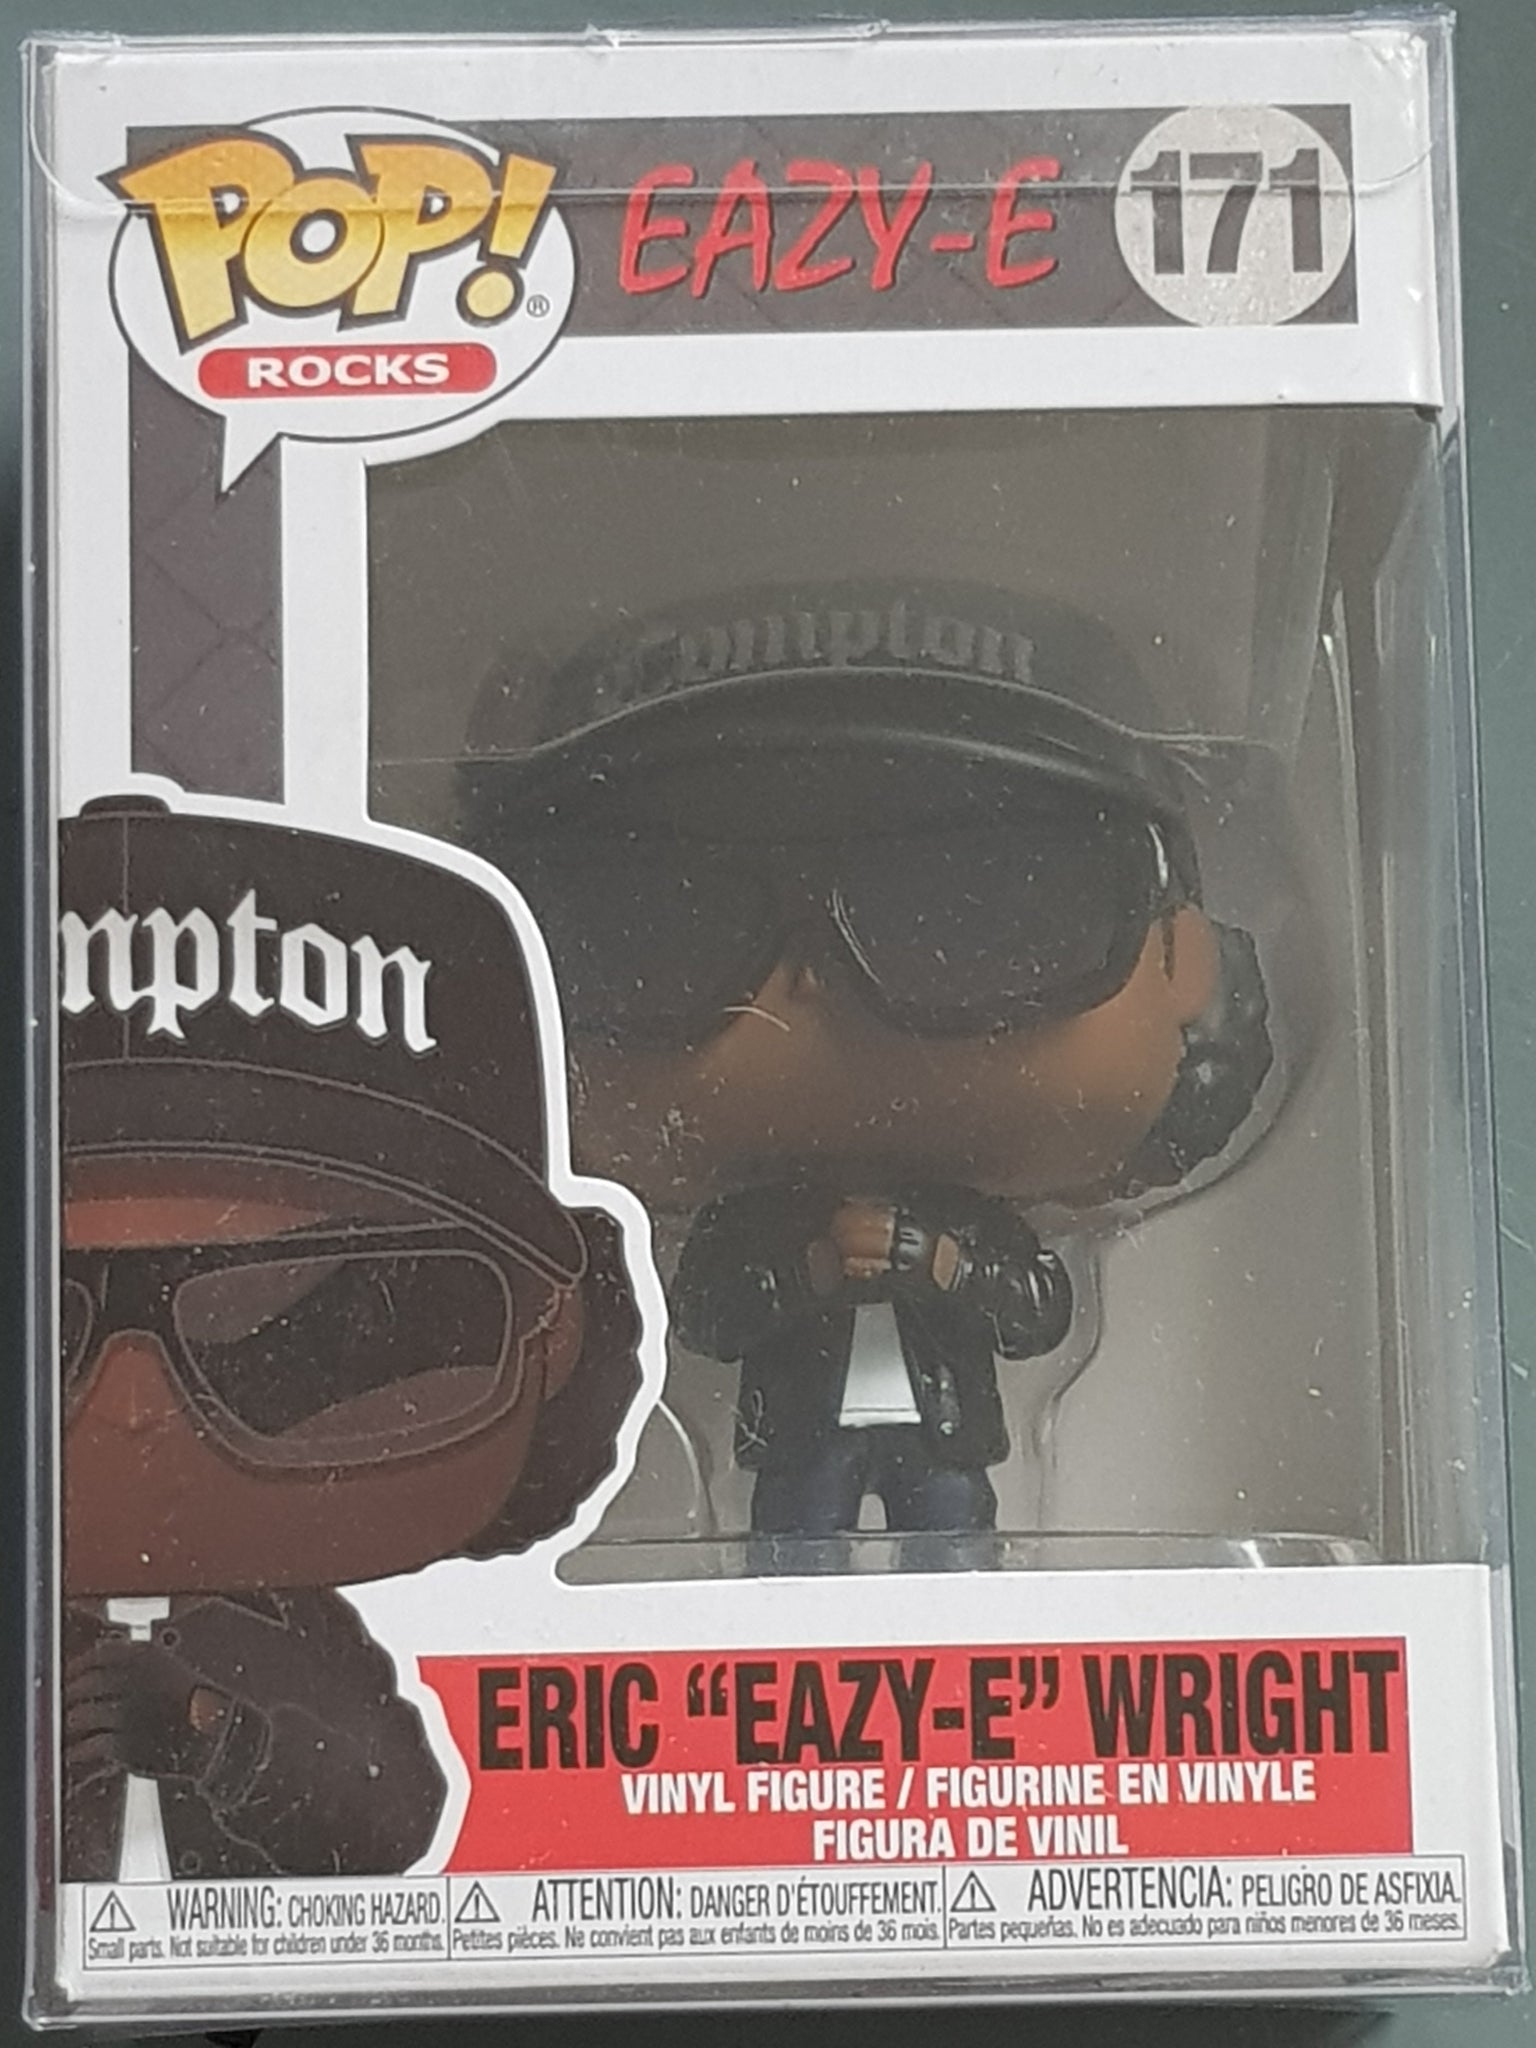 Funko Pop! Eazy-E #171 Vinyl Figure